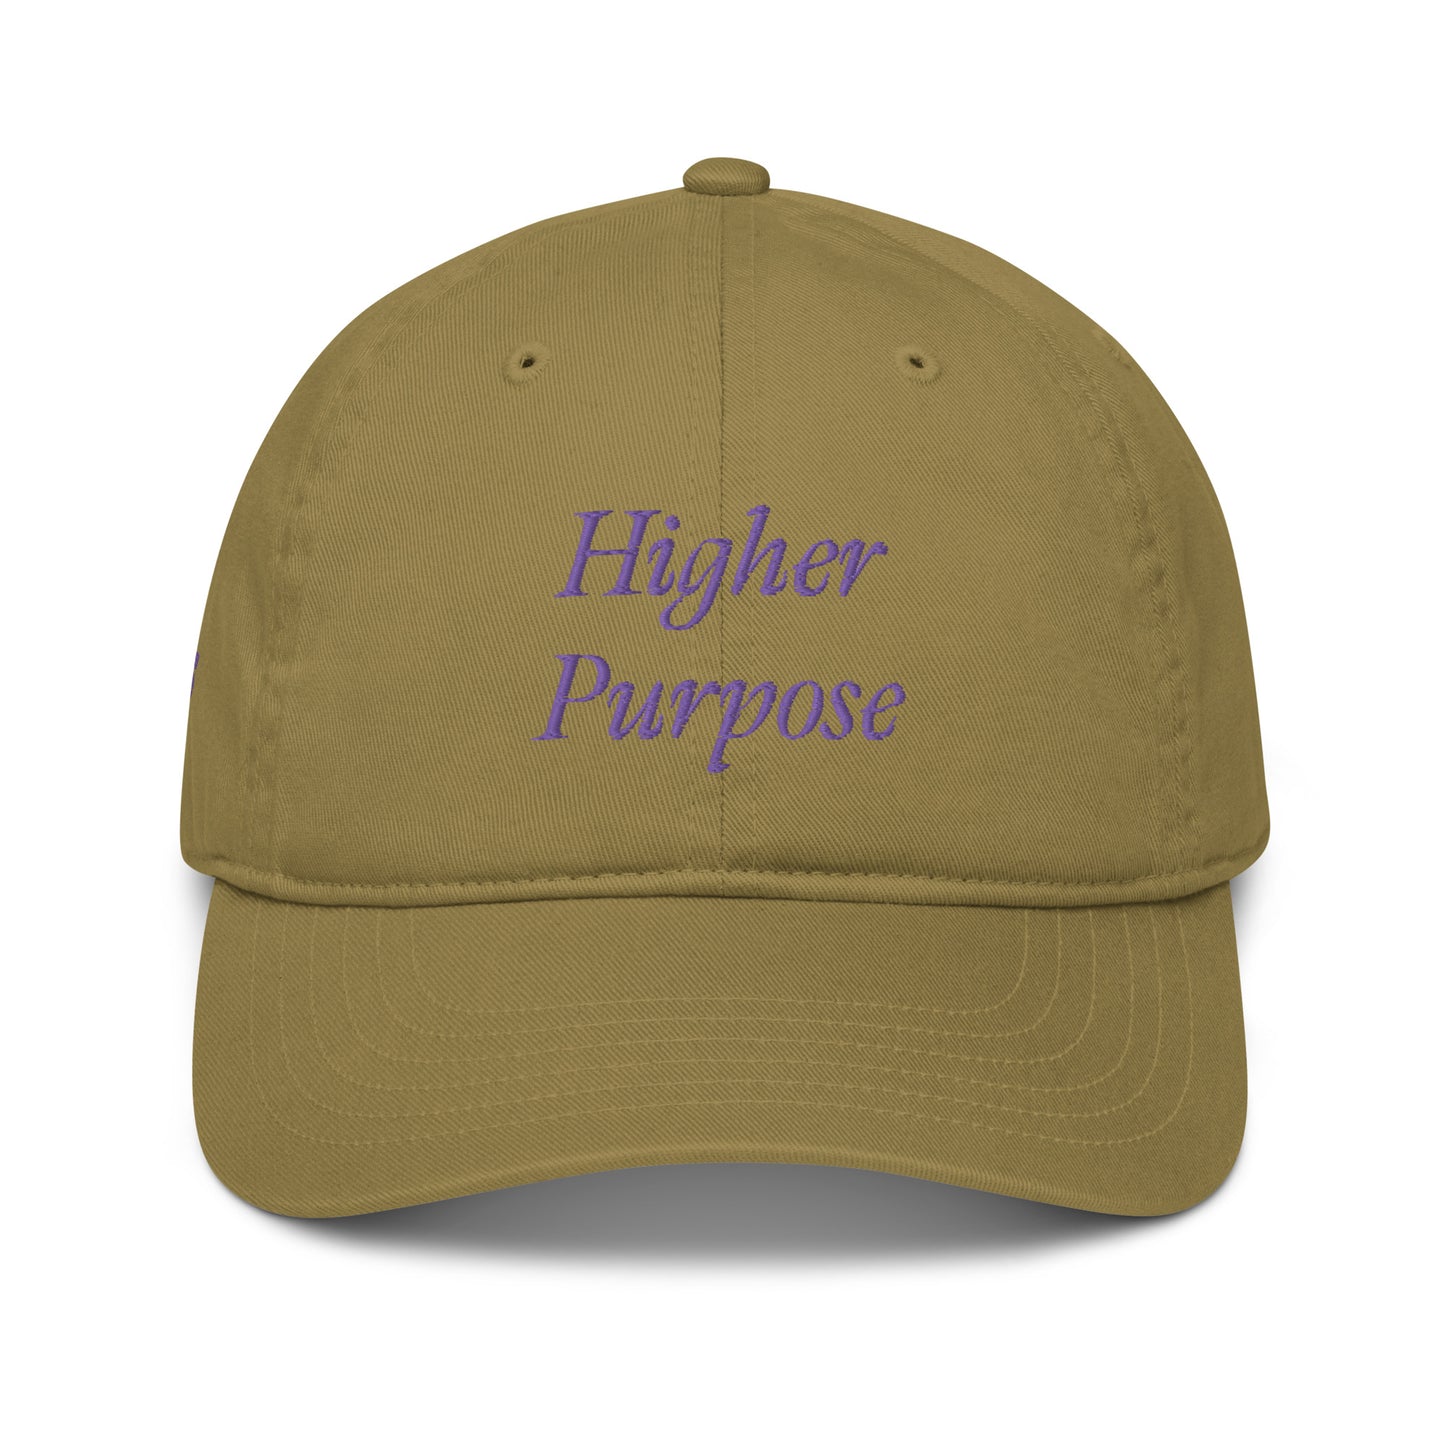 Higher Purpose Organic Cotton dad hat